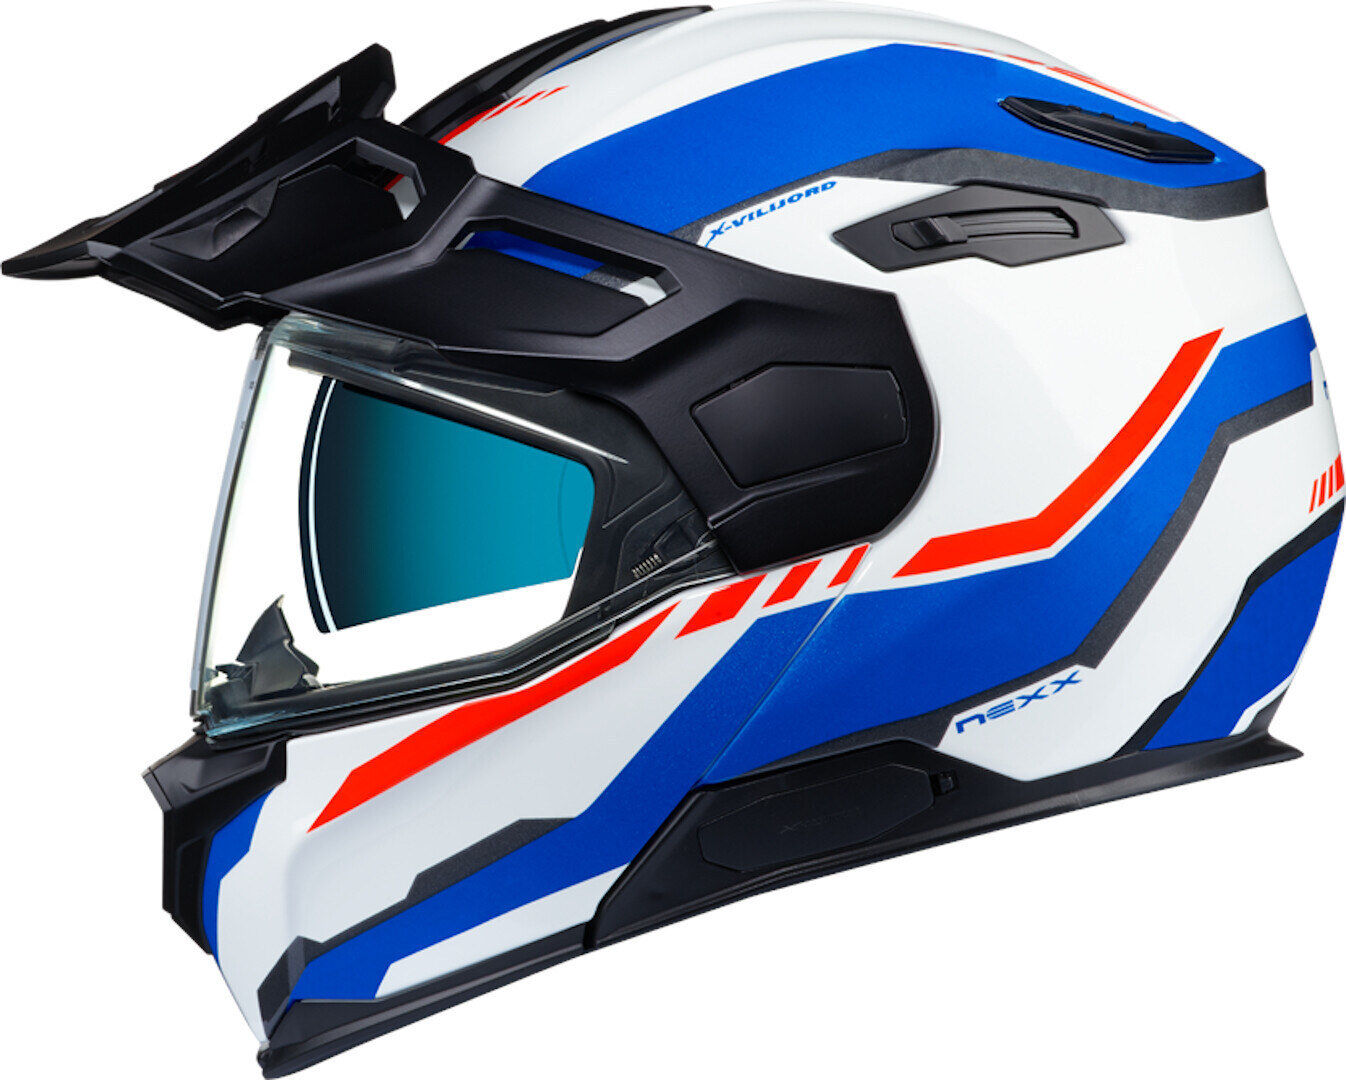 NEXX X.Vilijord Continental casco - Blanco Rojo Azul (XL)